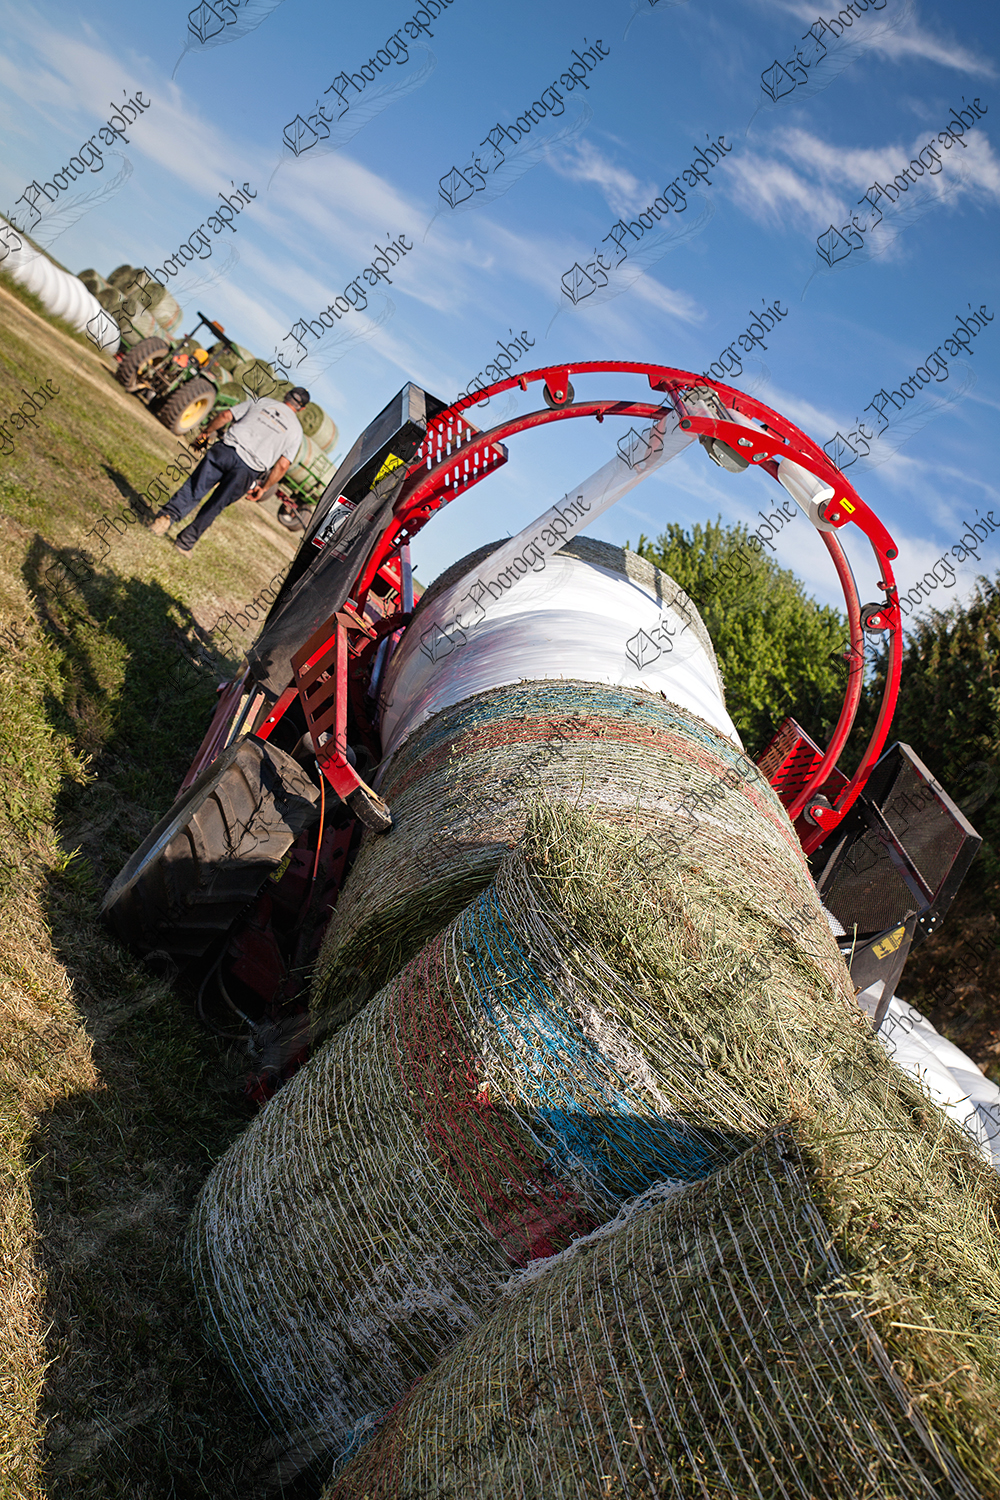 elze_photo_9280_agriculteur_enrobeuse_recolte_hay_harvest_tractor